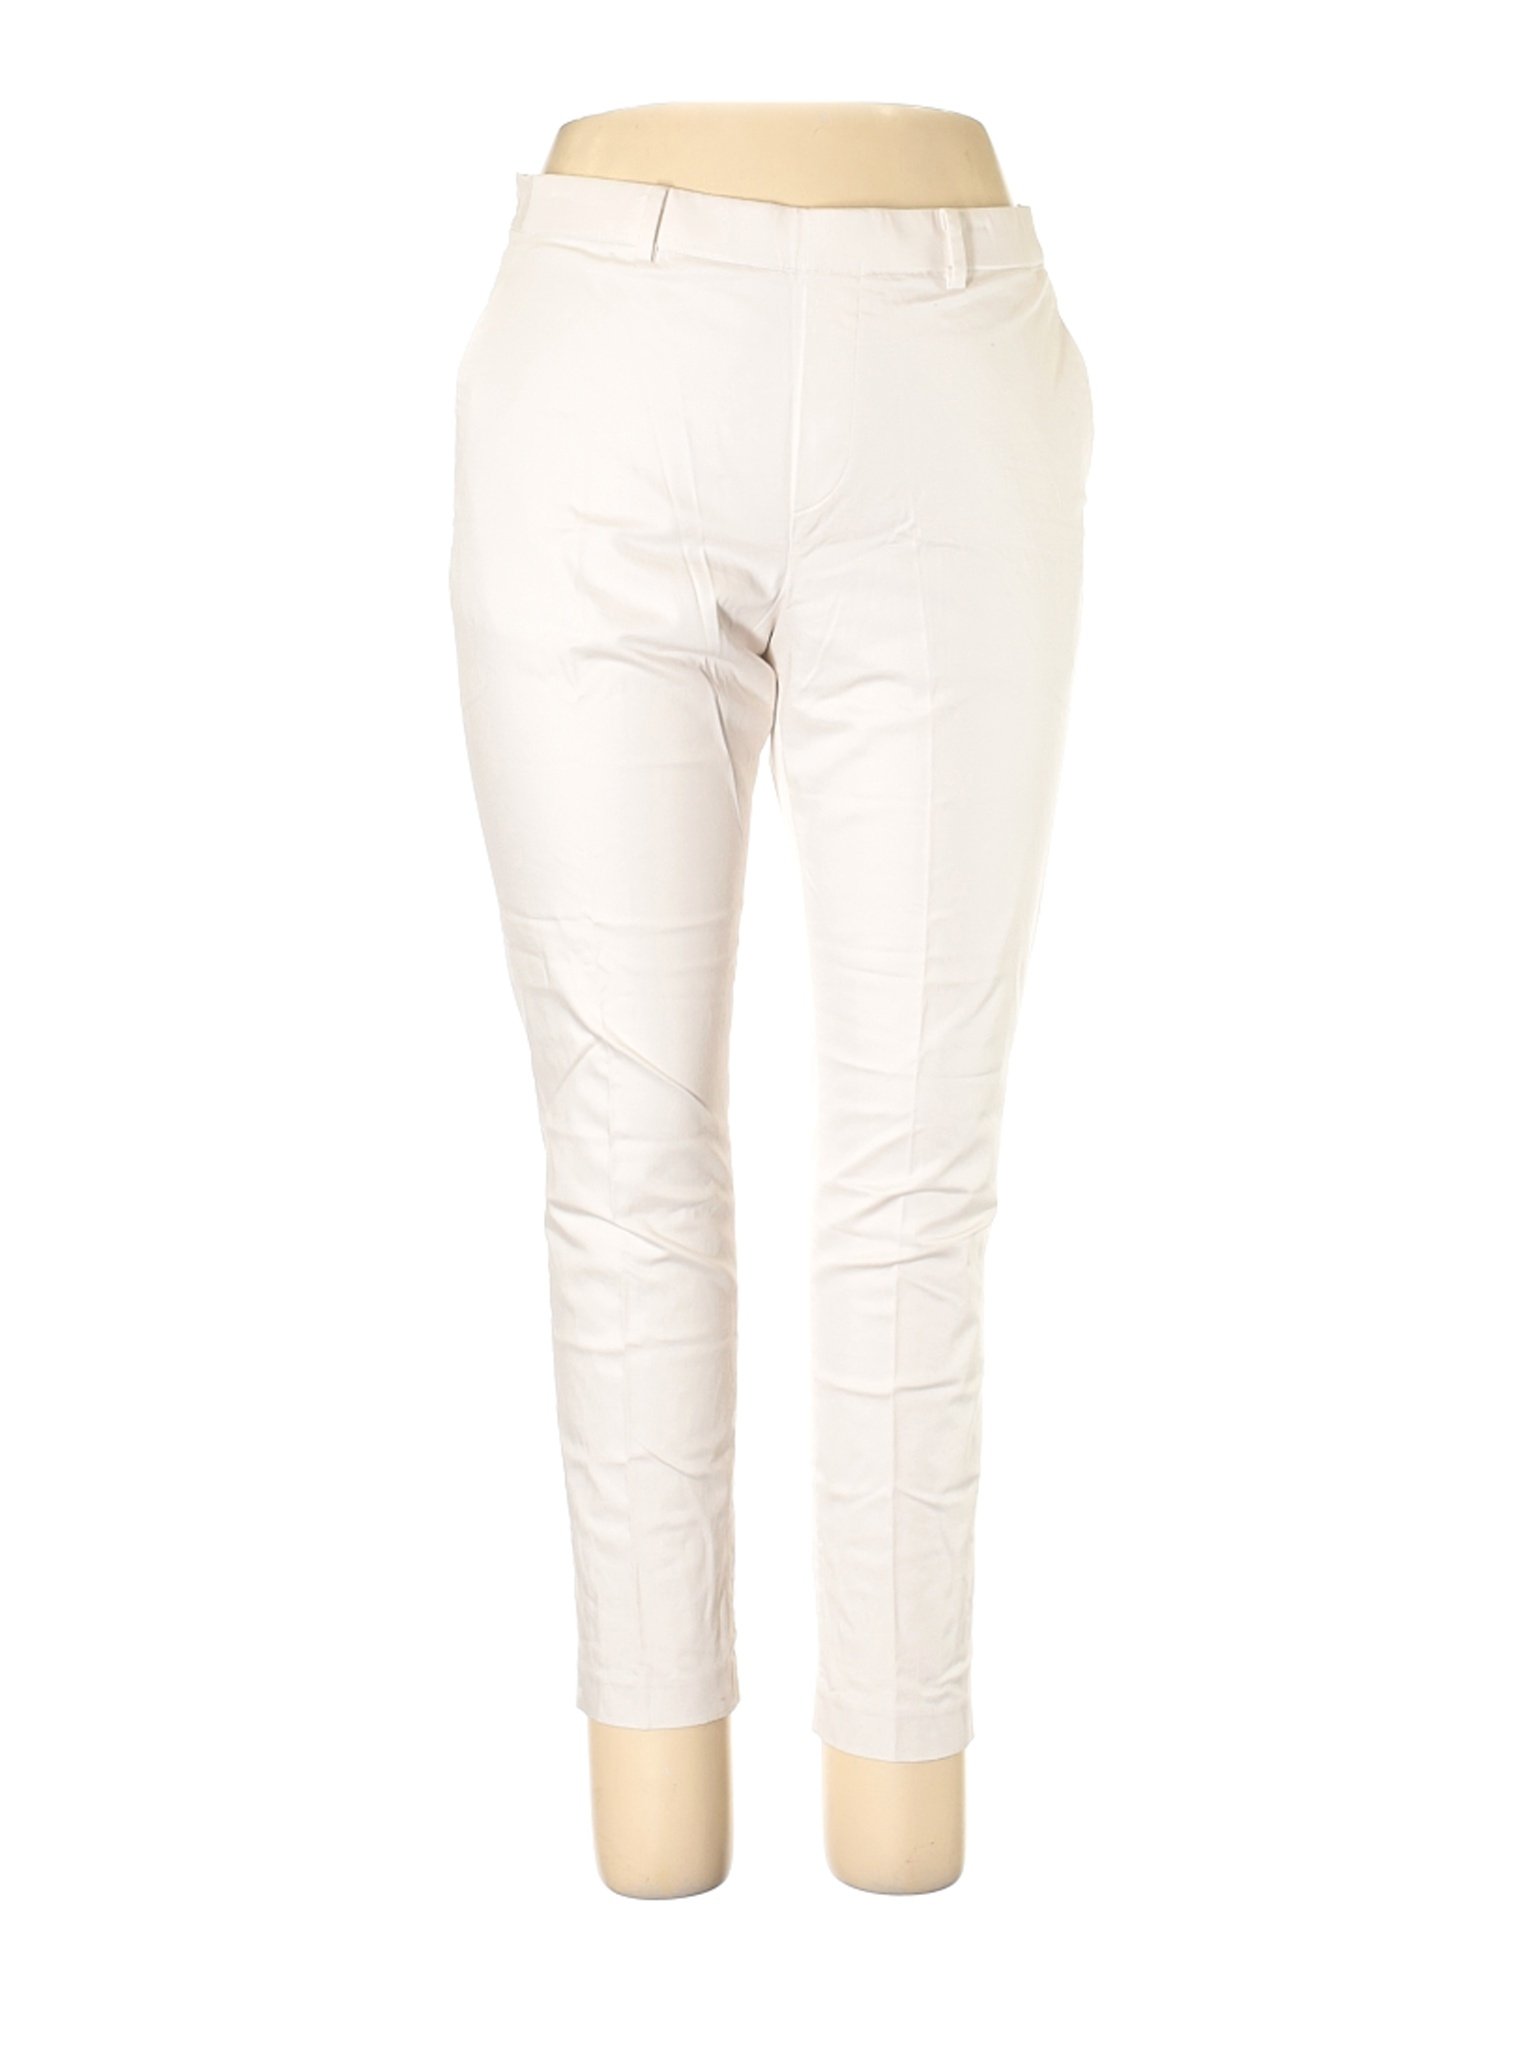 Uniqlo Women White Casual Pants XL | eBay